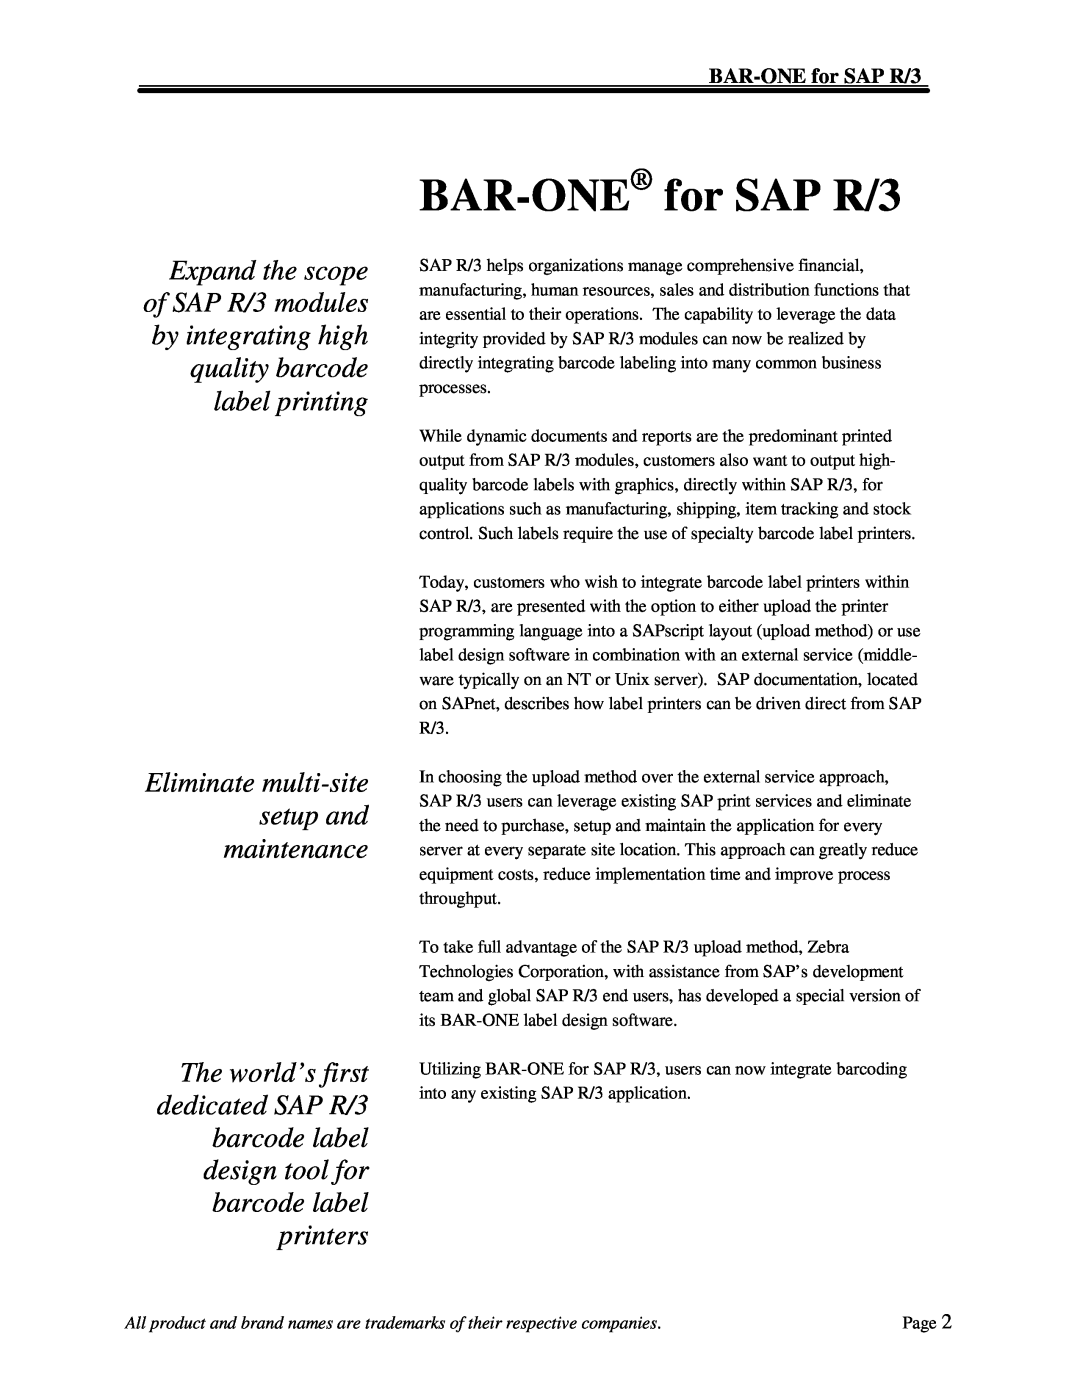 Zebra Technologies manual Eliminate multi-site setup and maintenance, BAR-ONE for SAP R/3 